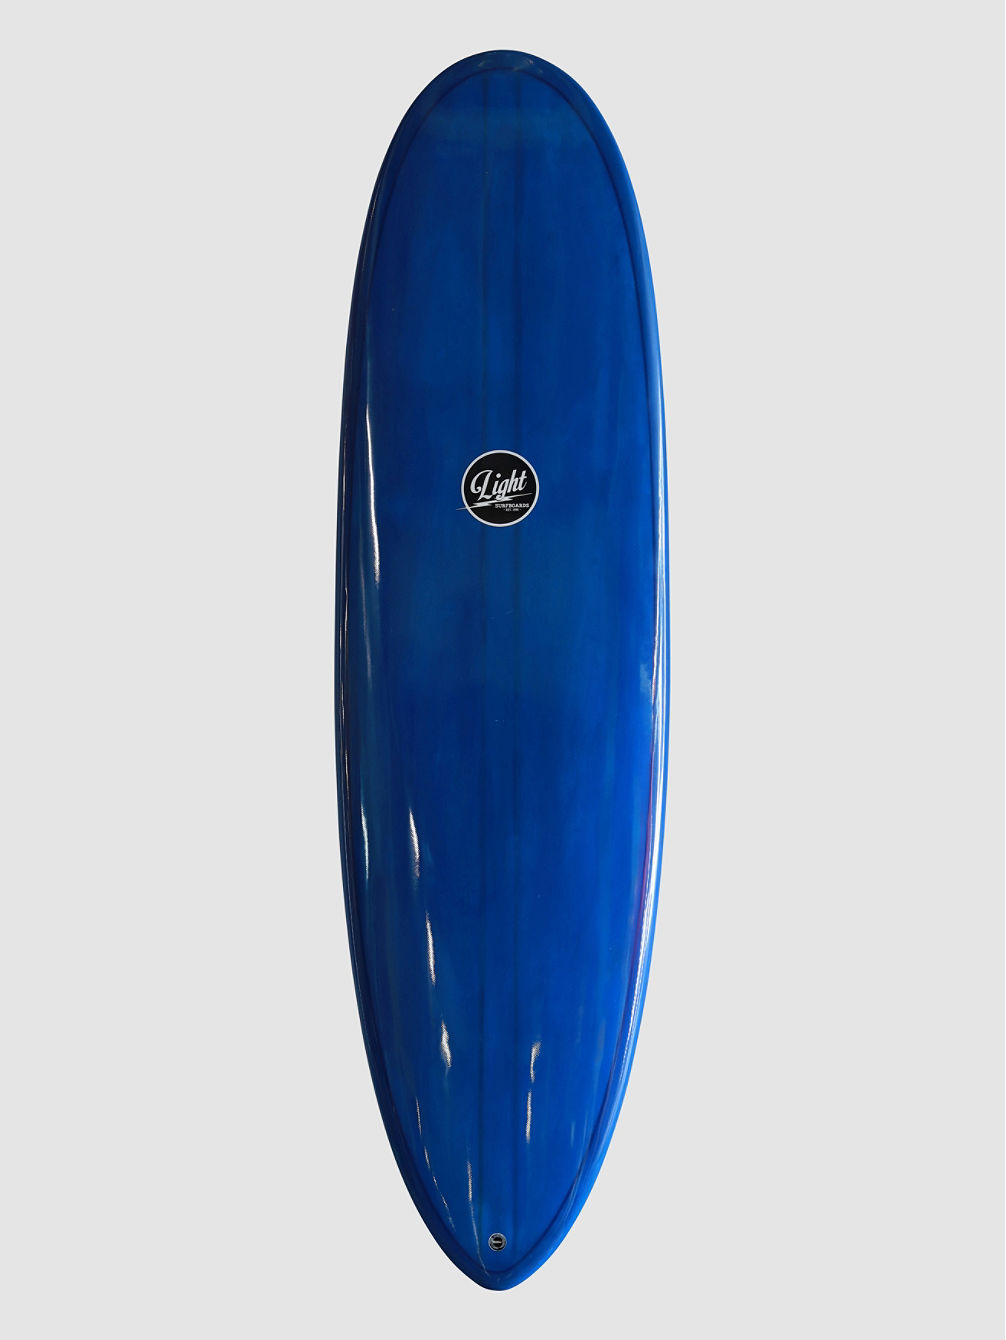 Golden Ratio Blue - PU - US + Future  6&amp;#039; Prancha de Surf